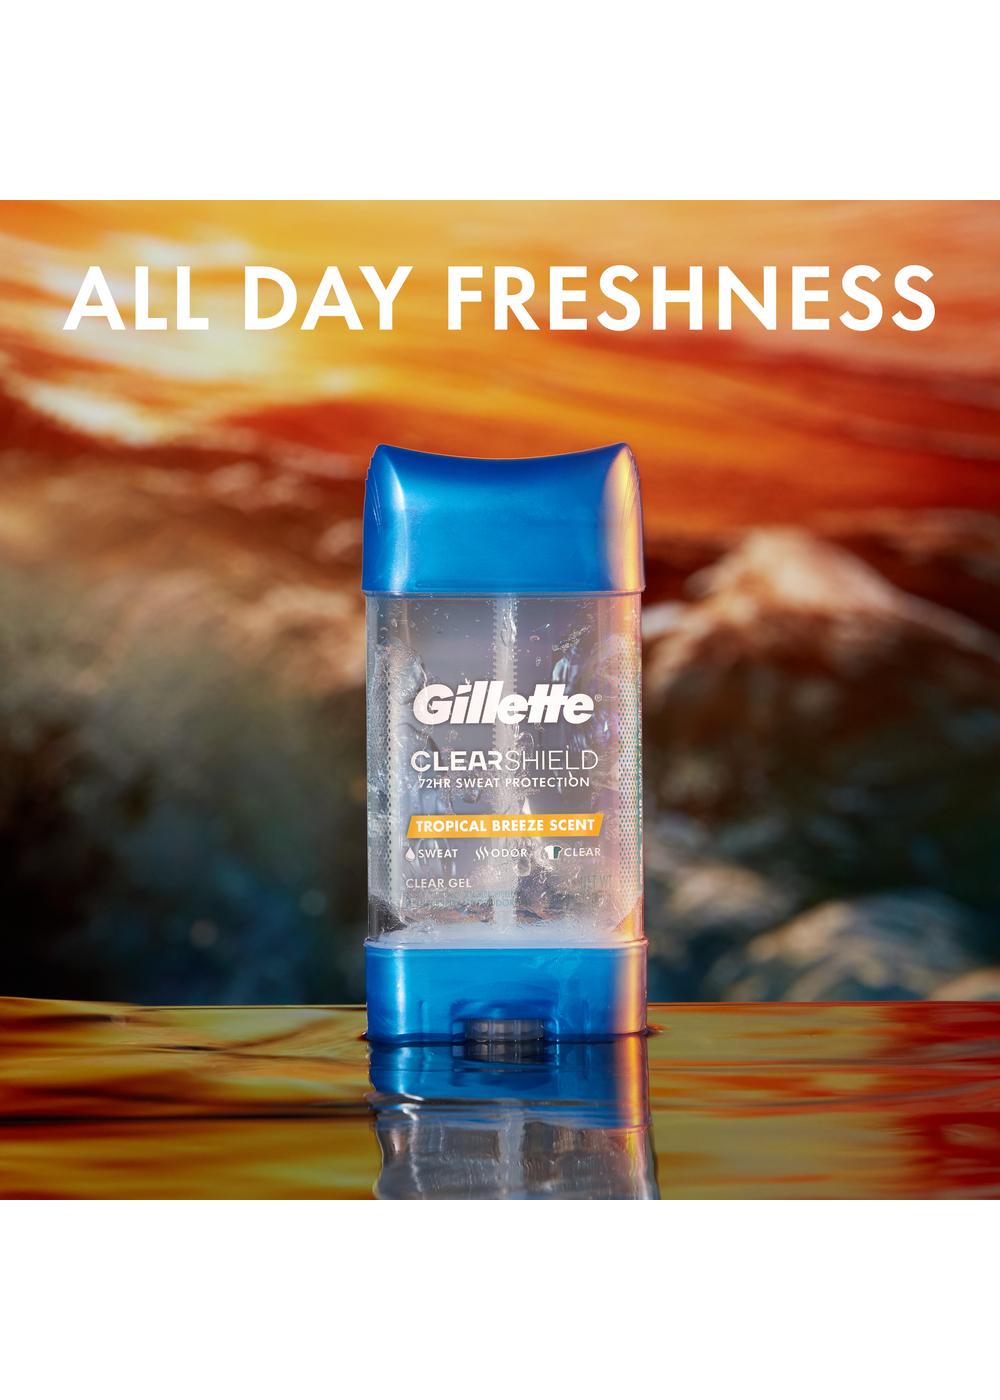 Gillette Clear Shield Antiperspirant Deodorant Gel - Tropical Breeze; image 3 of 6